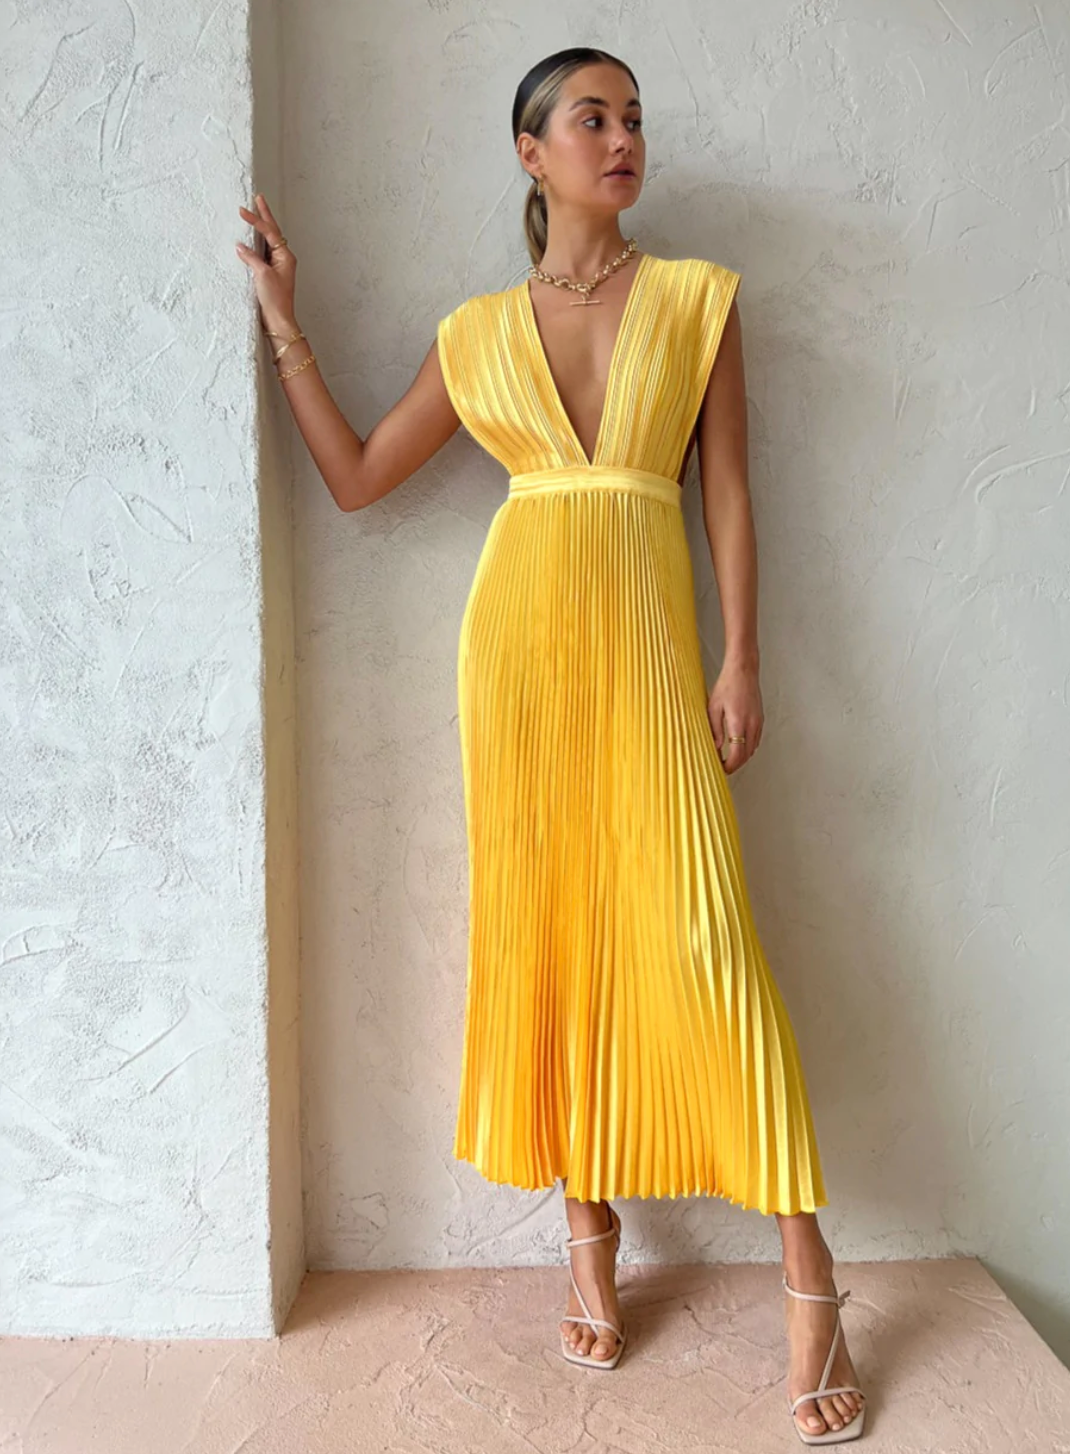 Kathryn Newton Yellow Plunging Neck Dress 2019 Emmy Awards -  TheCelebrityDresses